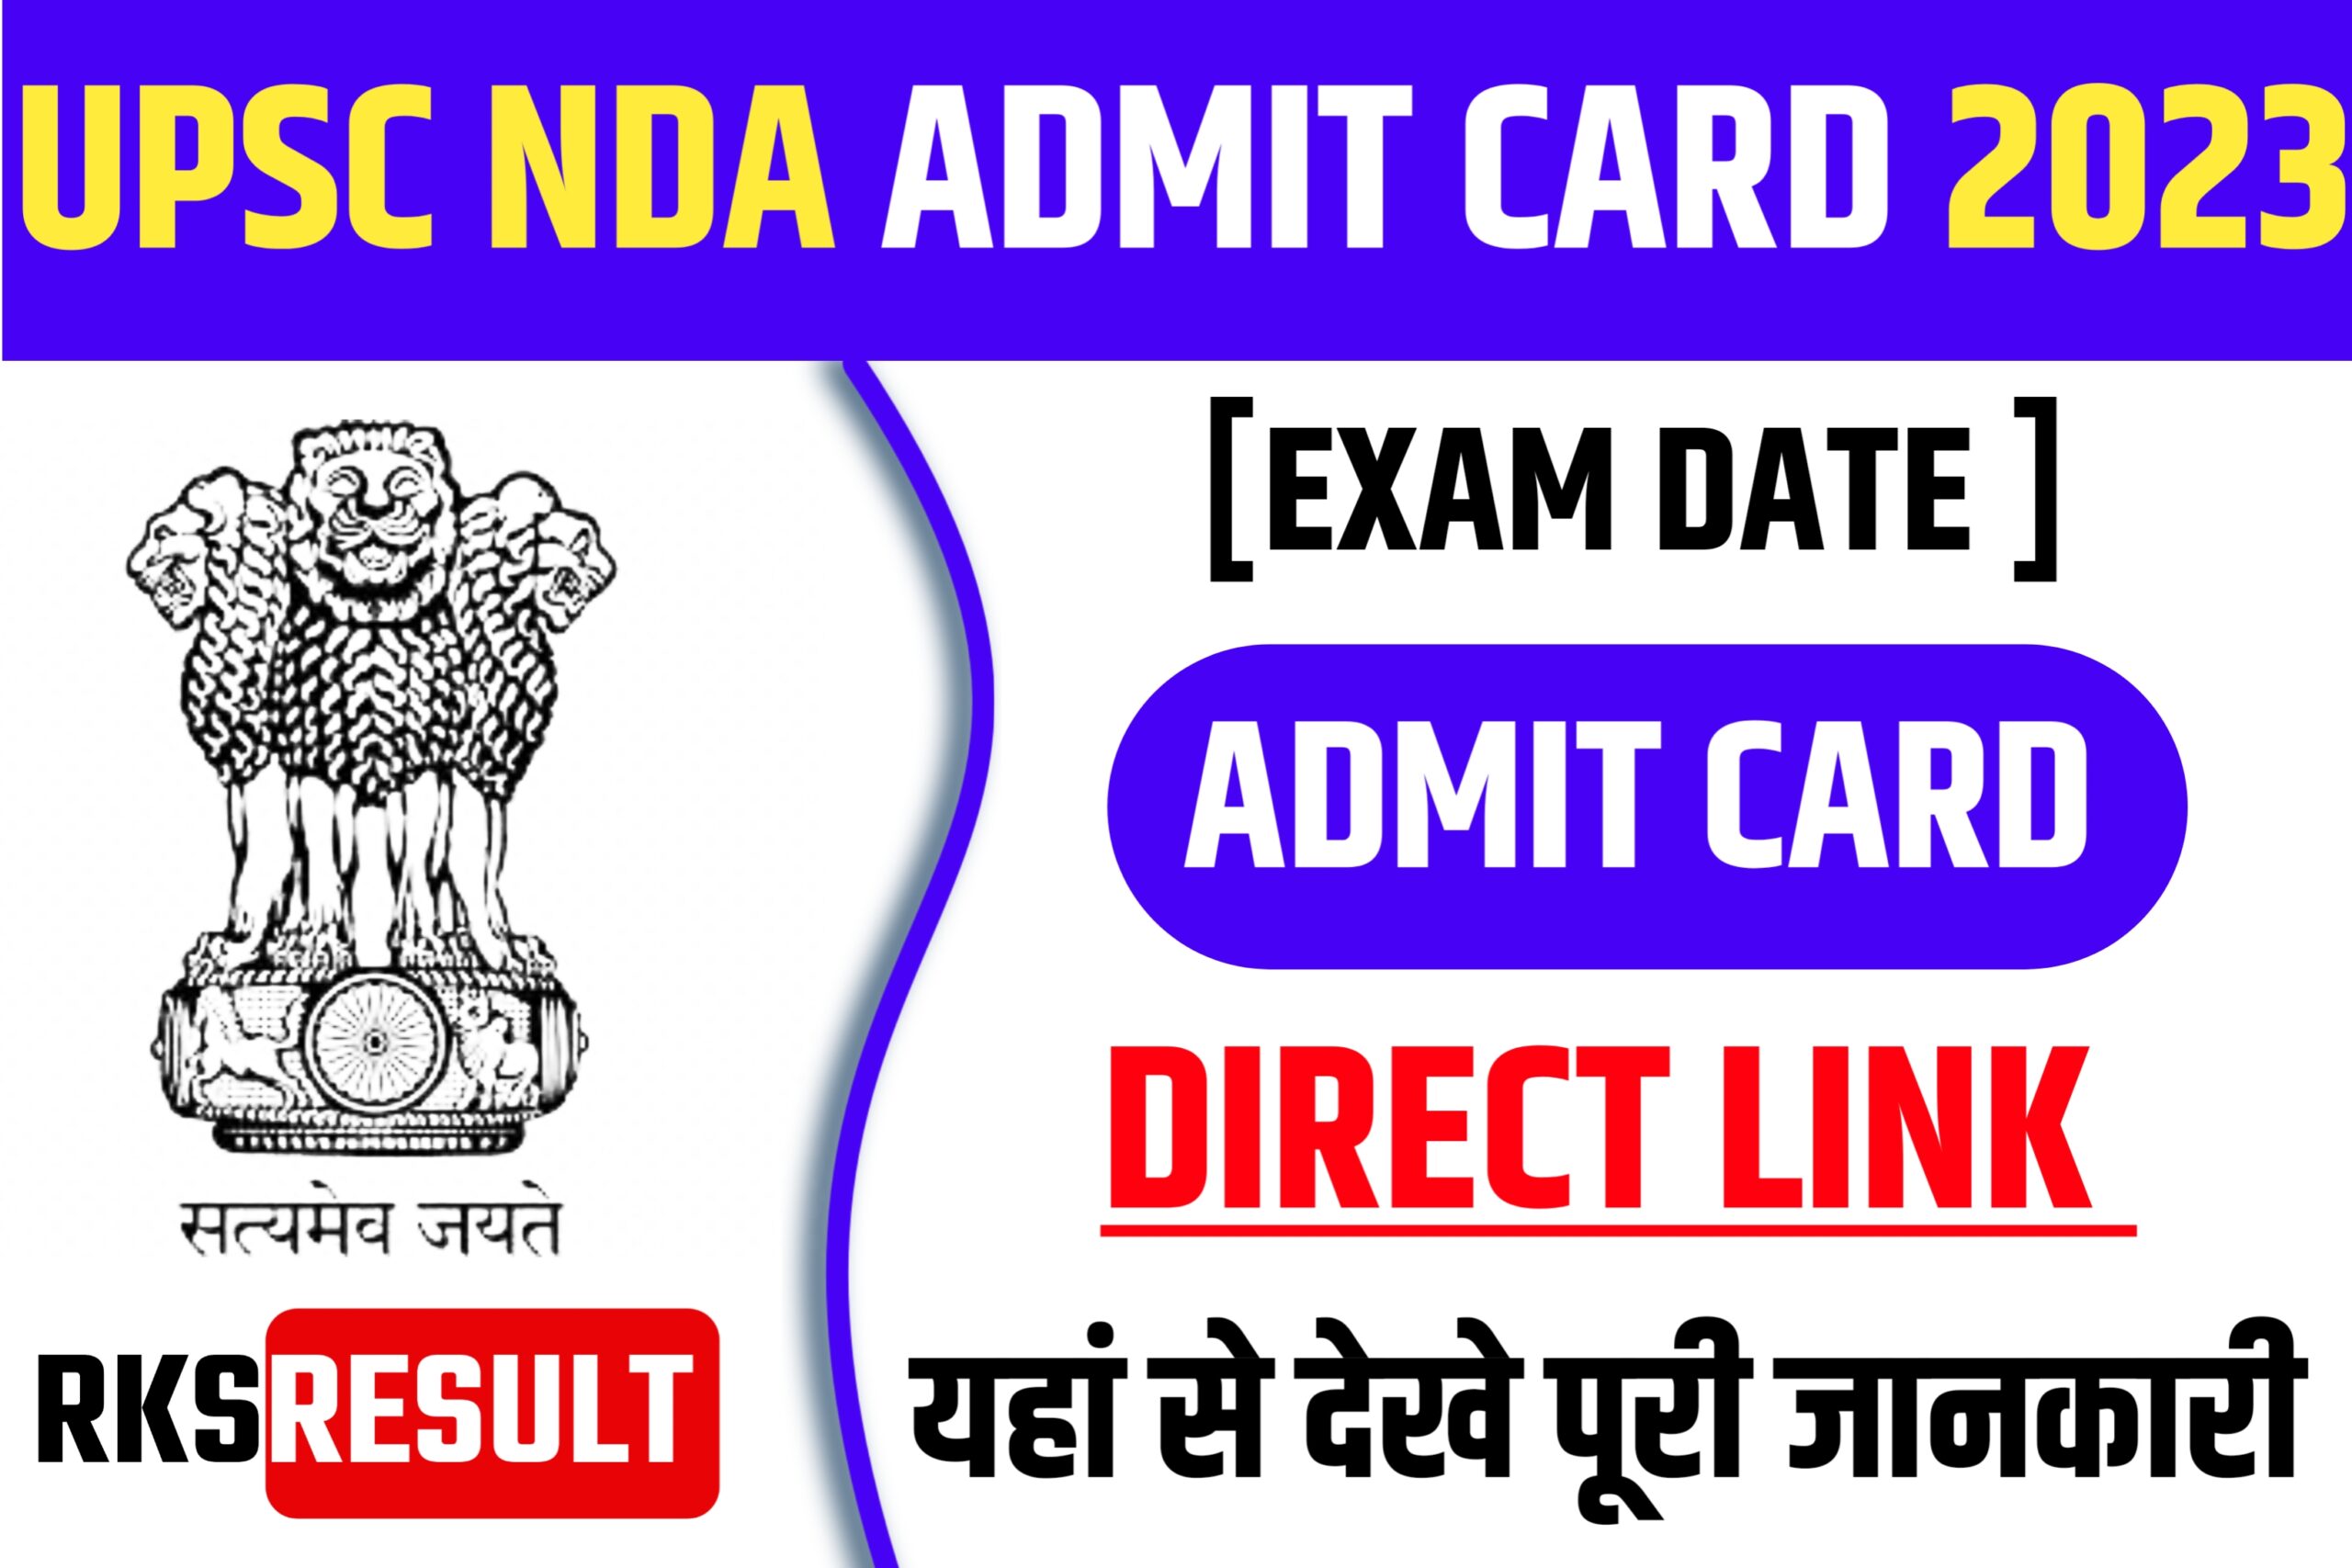 NDA Admit Card 2023